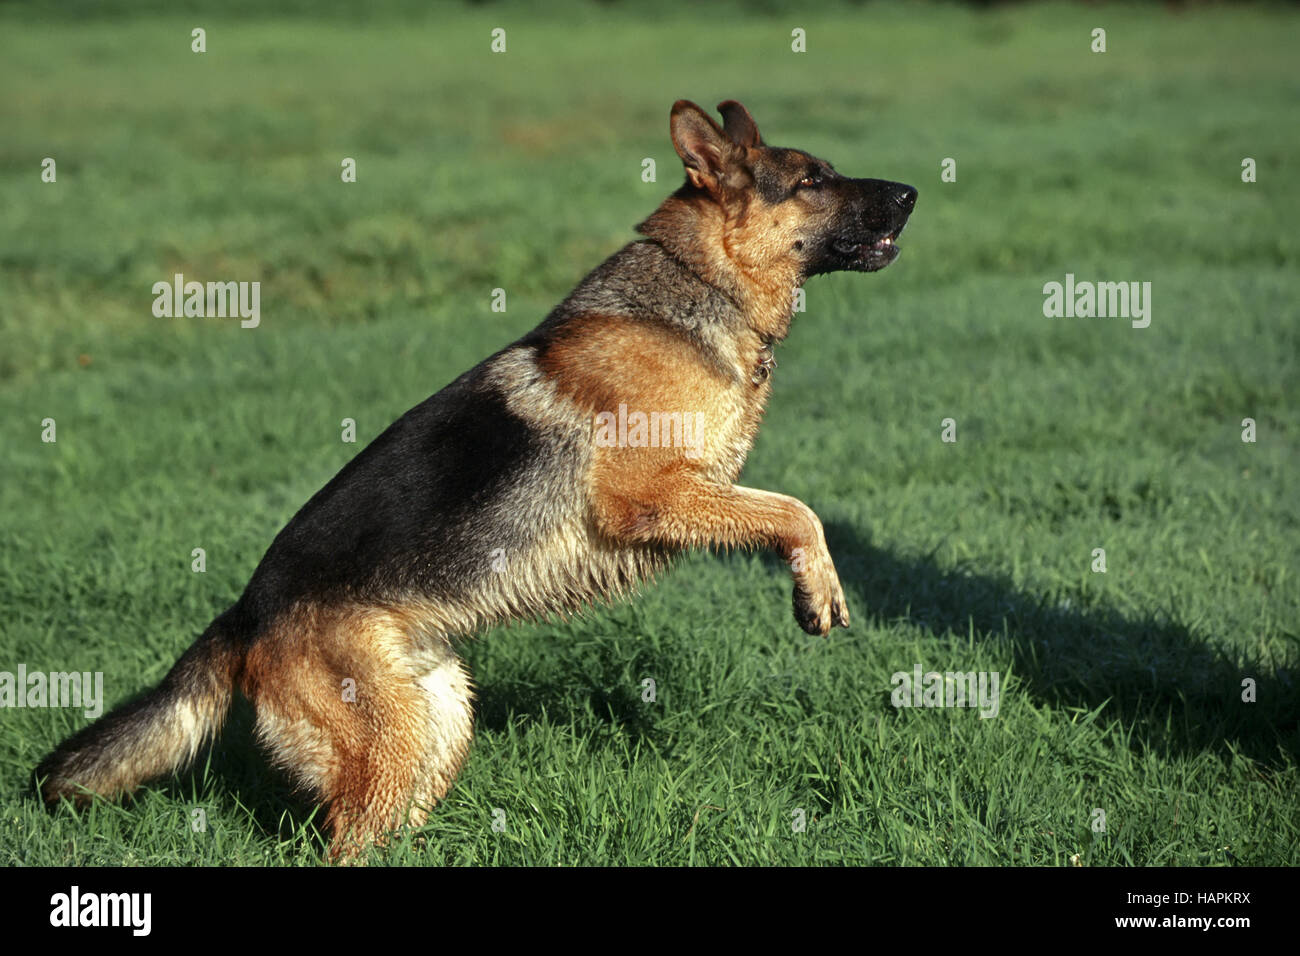 Deutscher Schaeferhund High Resolution Stock Photography and Images - Alamy